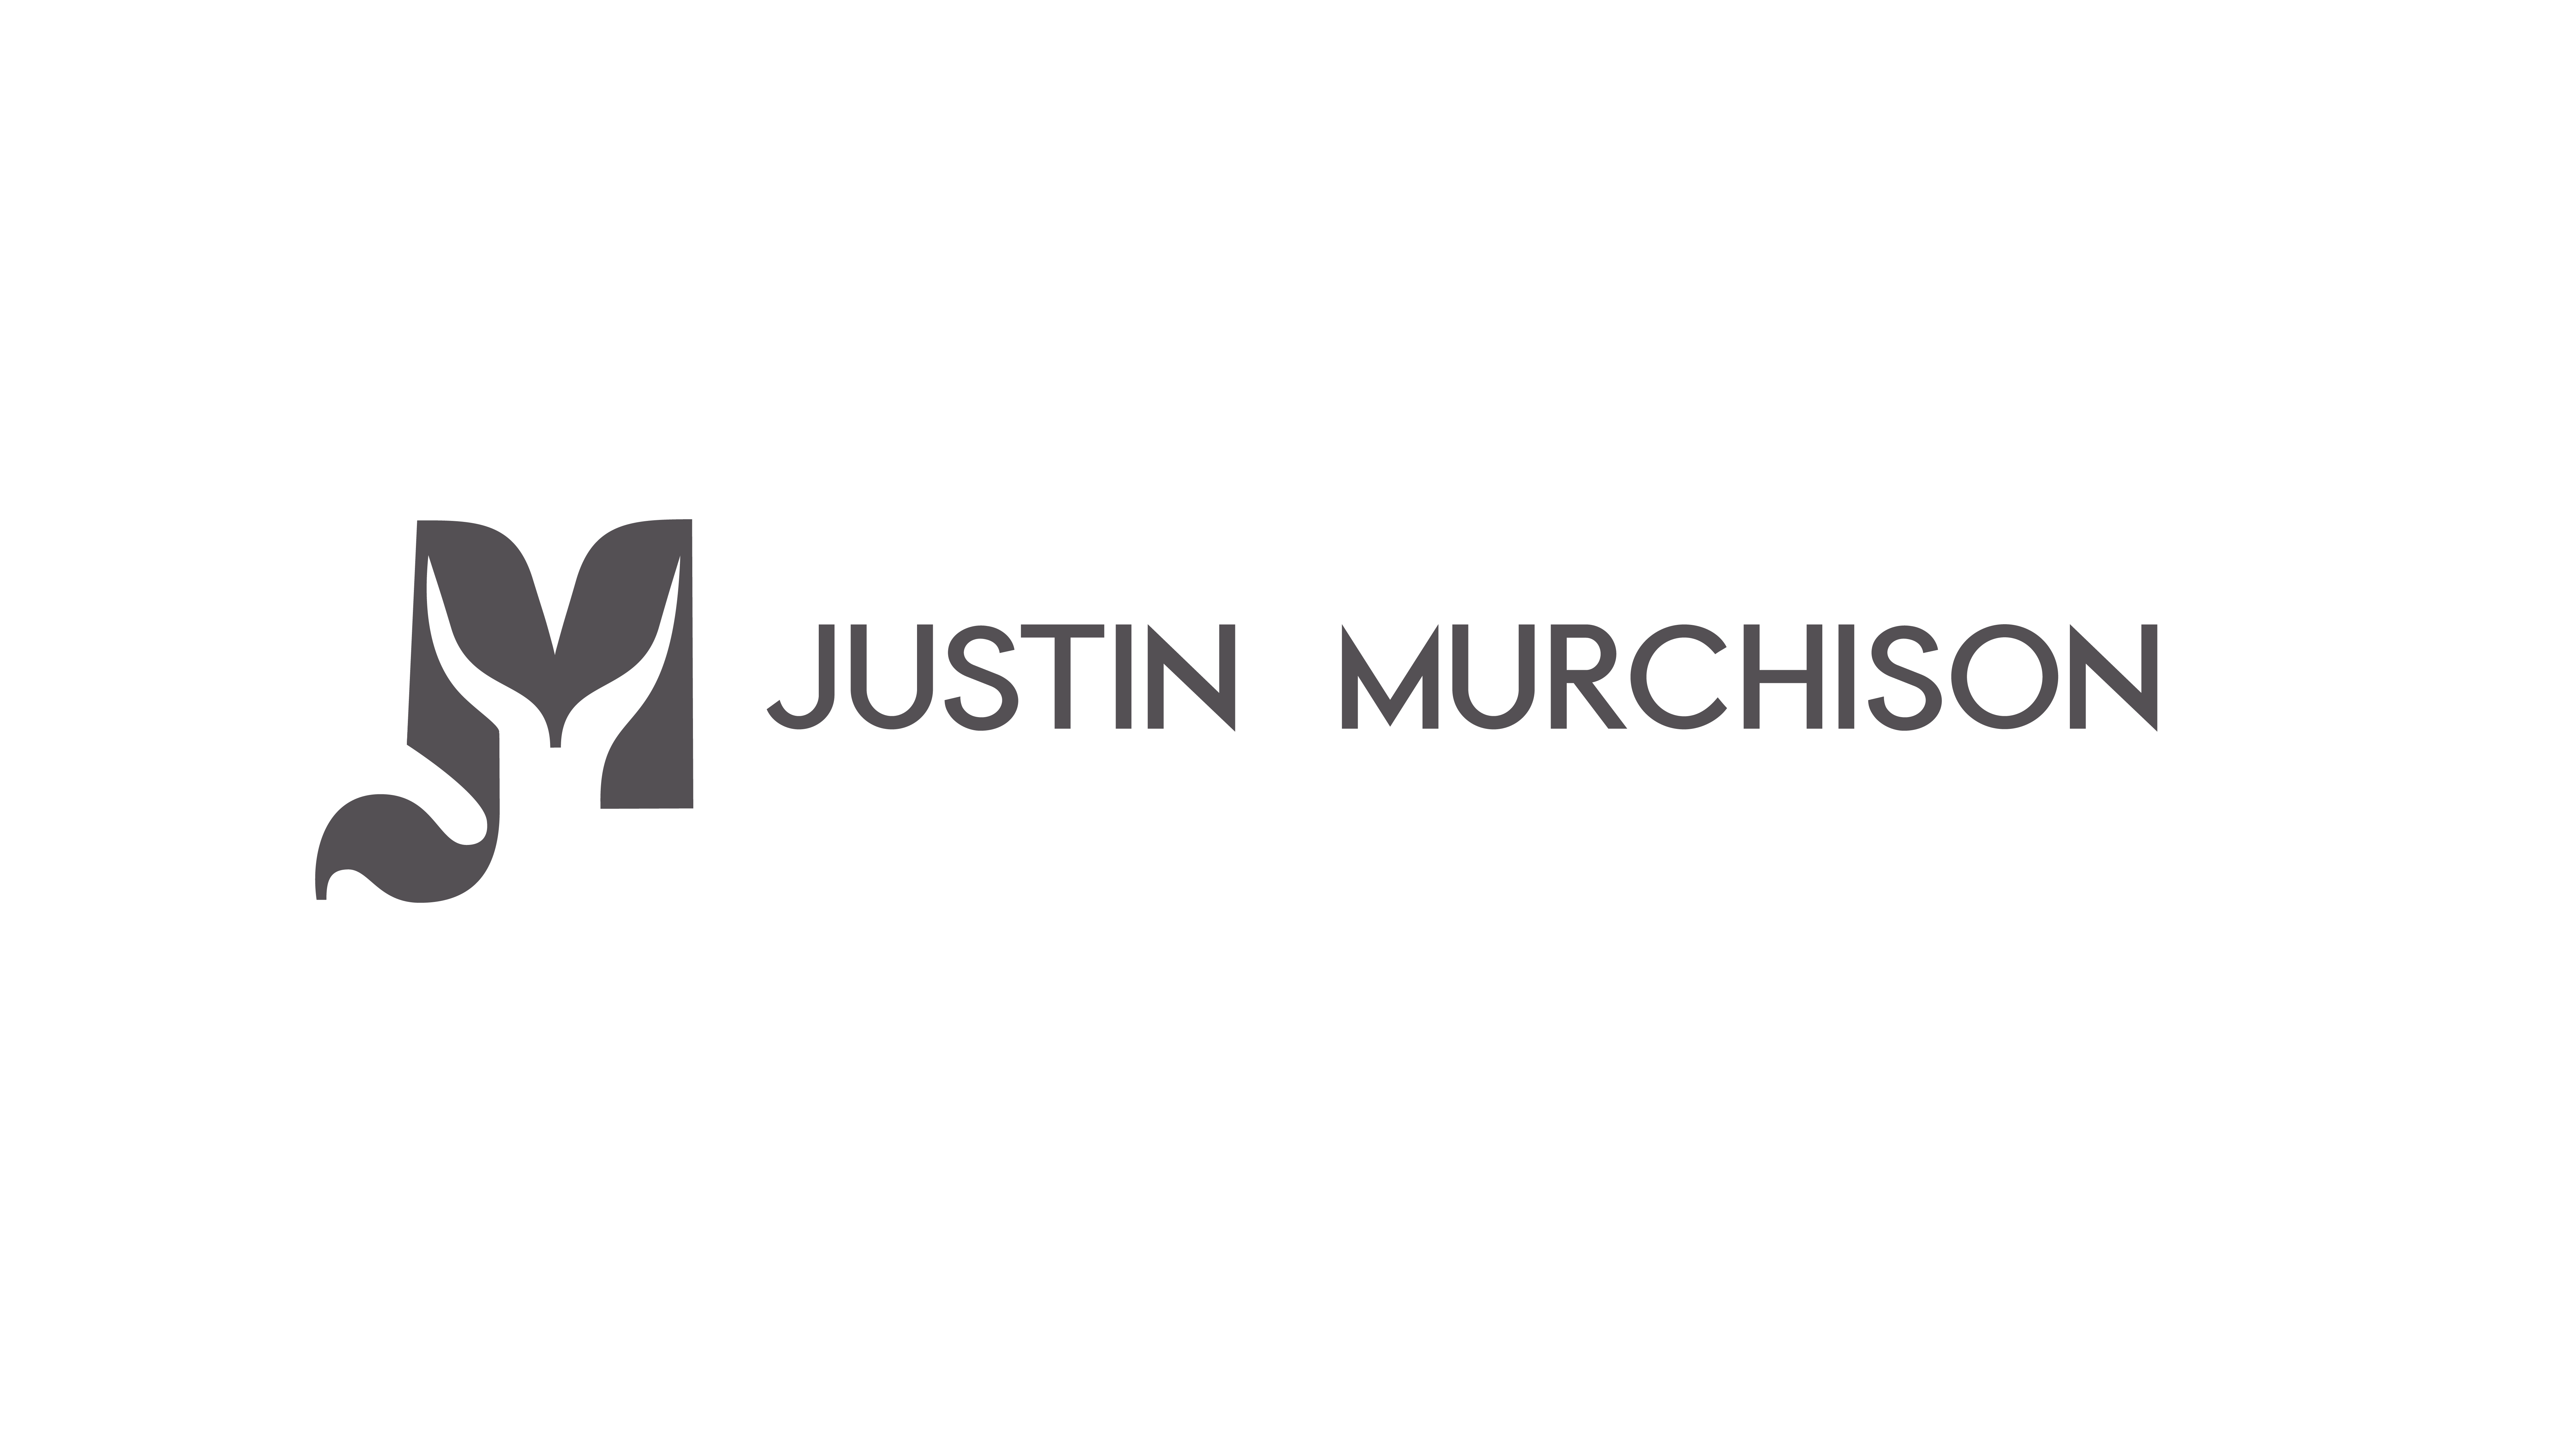 Justin Murchison